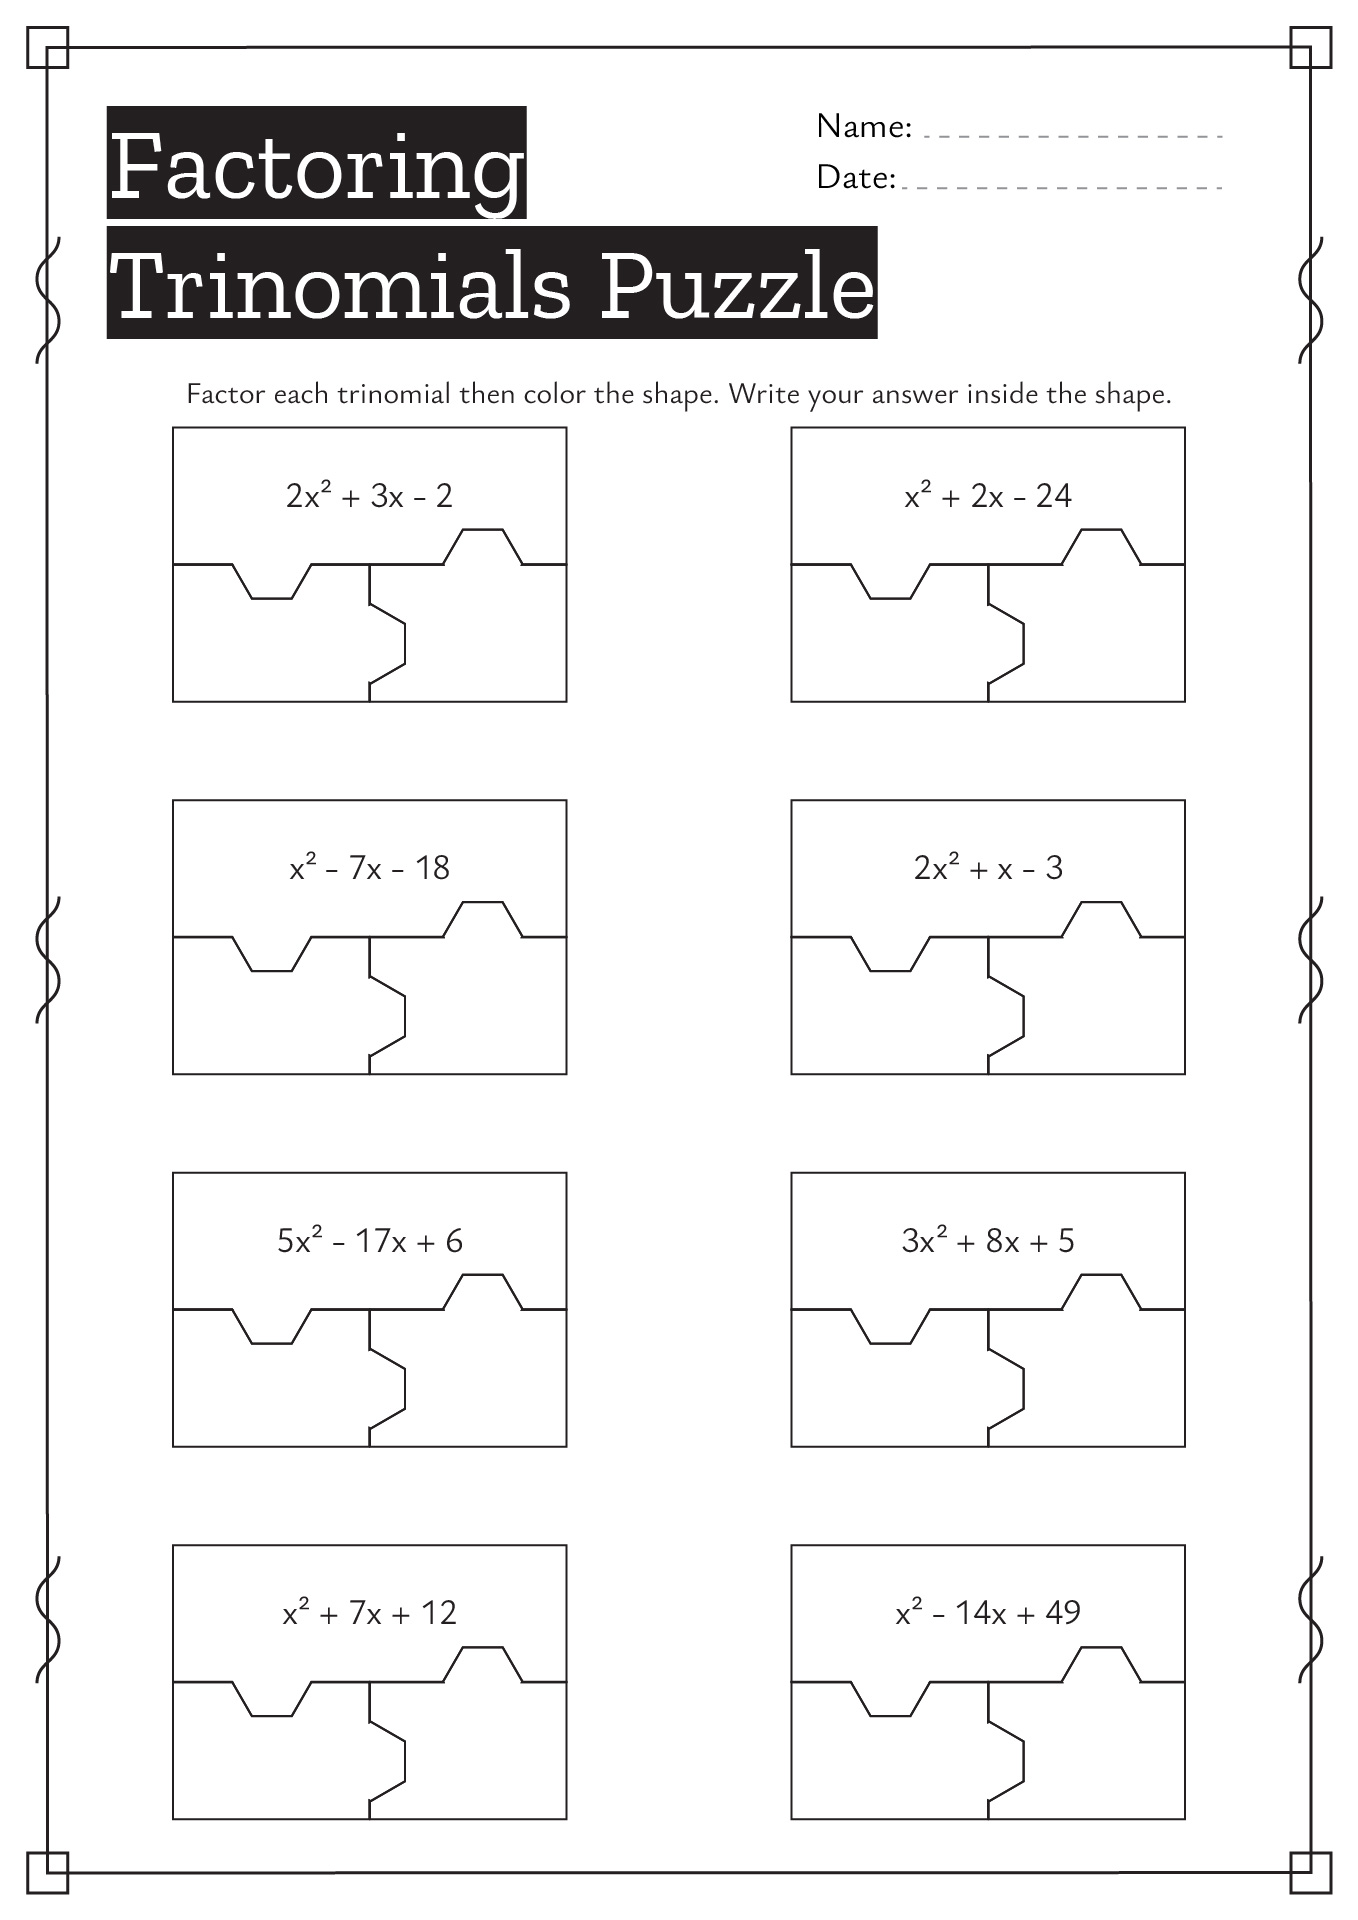 16 Algebra 1 Factoring Puzzle Worksheets Worksheeto